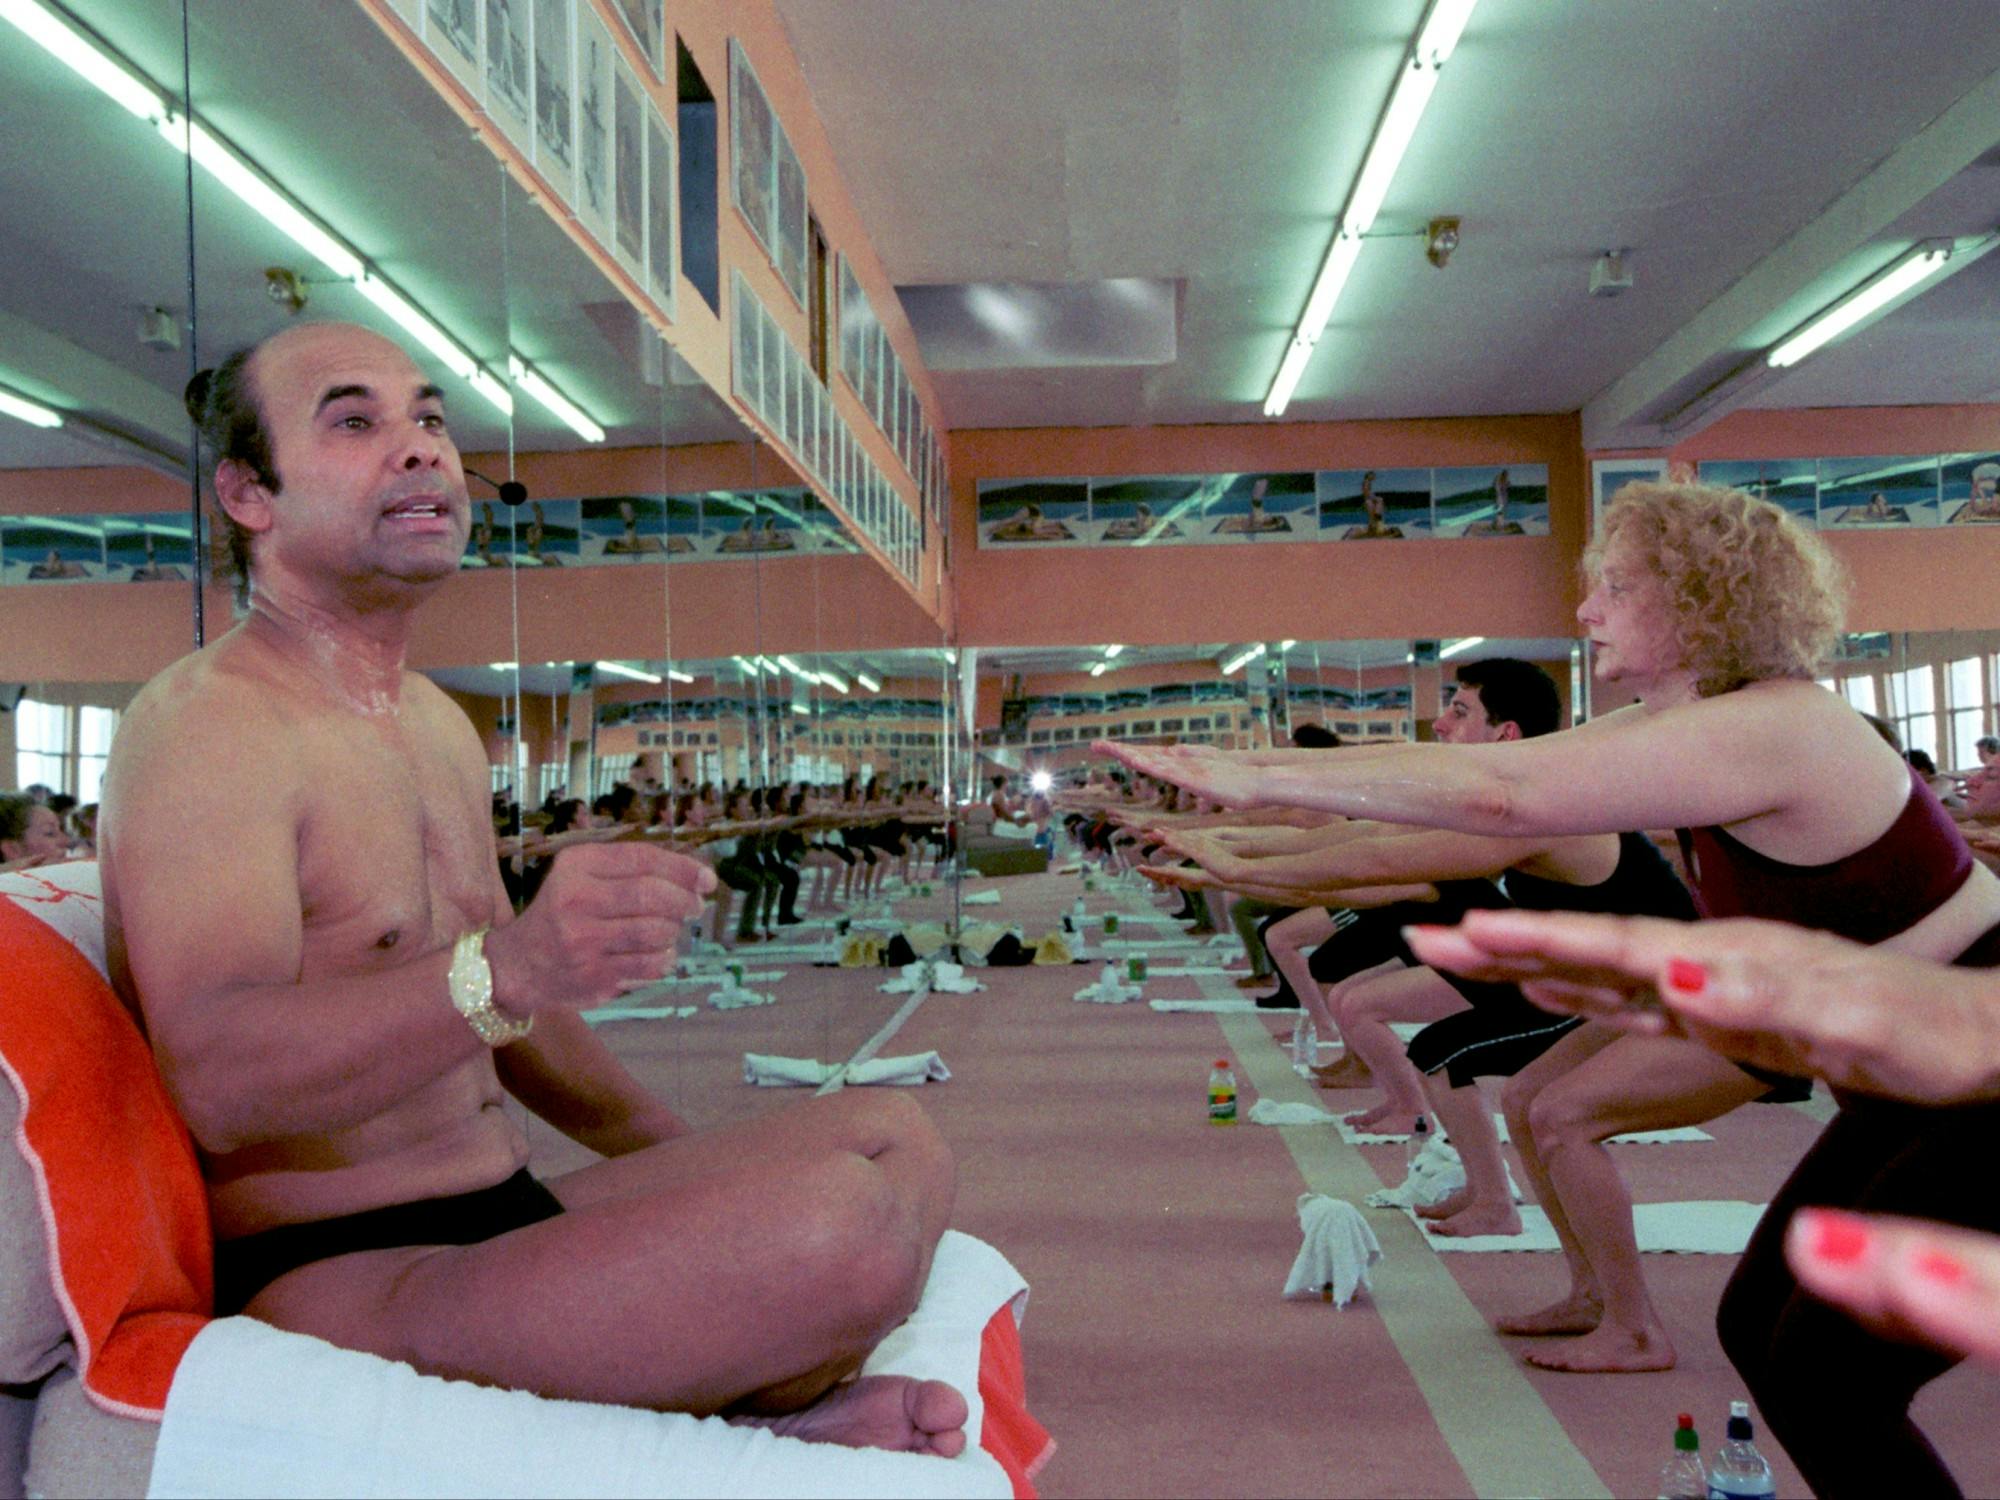 Indian Yoga guru Bikram Choudhury instructs his yoga class in heated room, Beverly Hills, California, February 2, 2000. (Photo by Bob Riha, Jr./Getty Images)